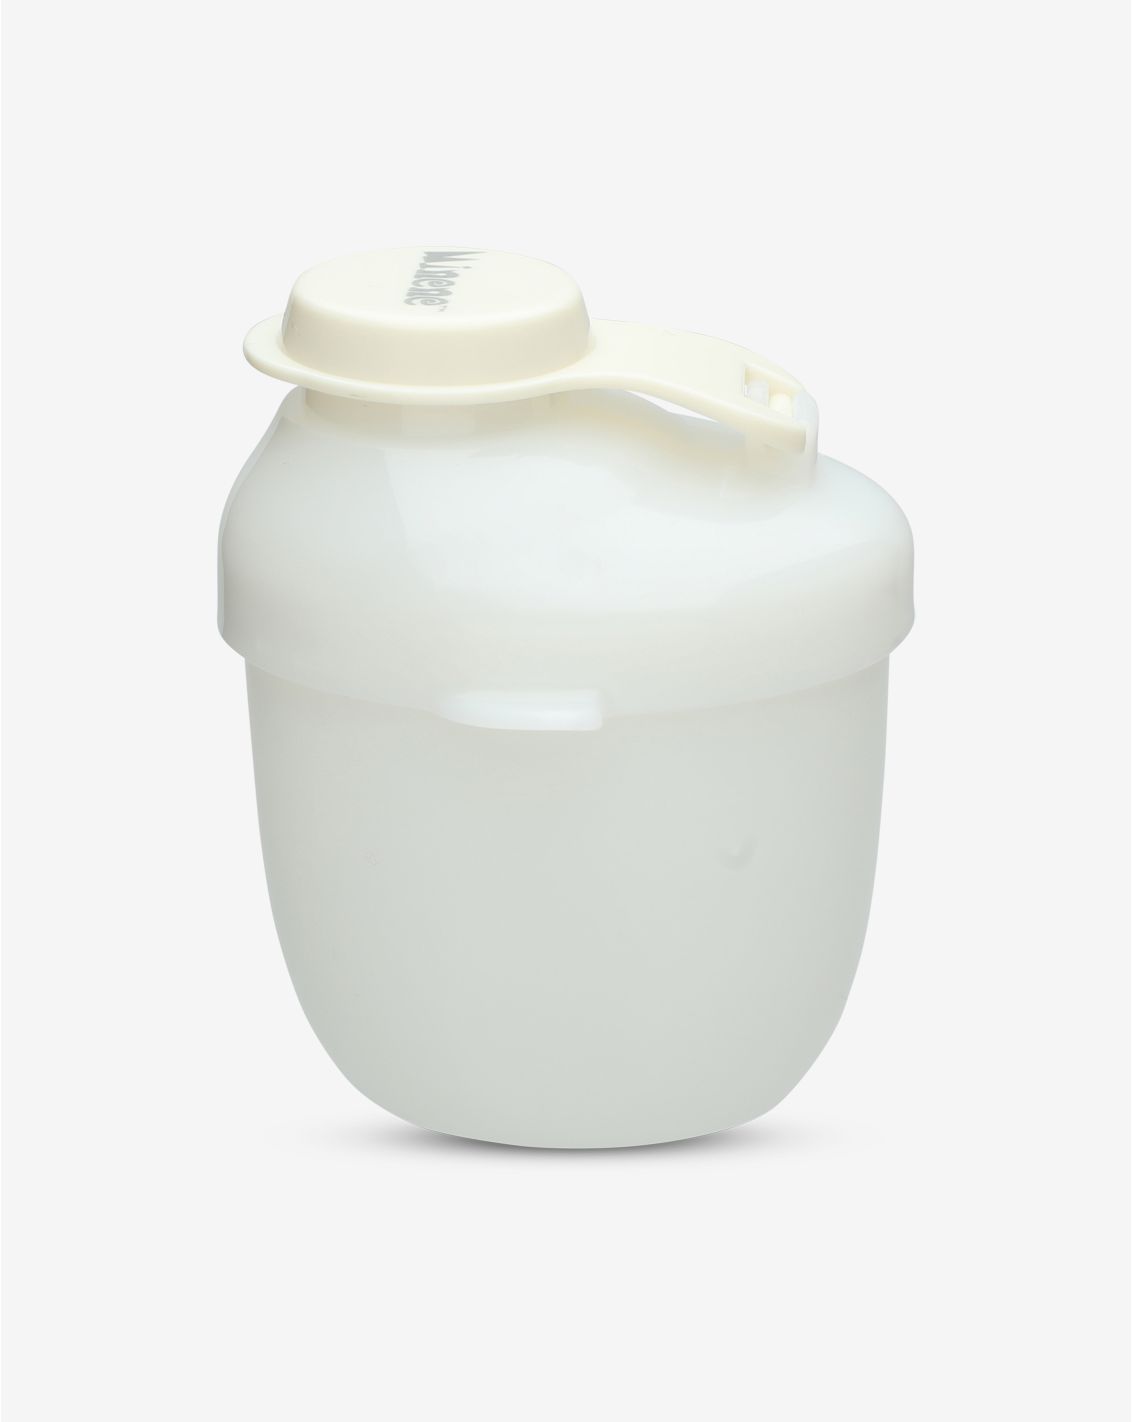 Small Milk powder container